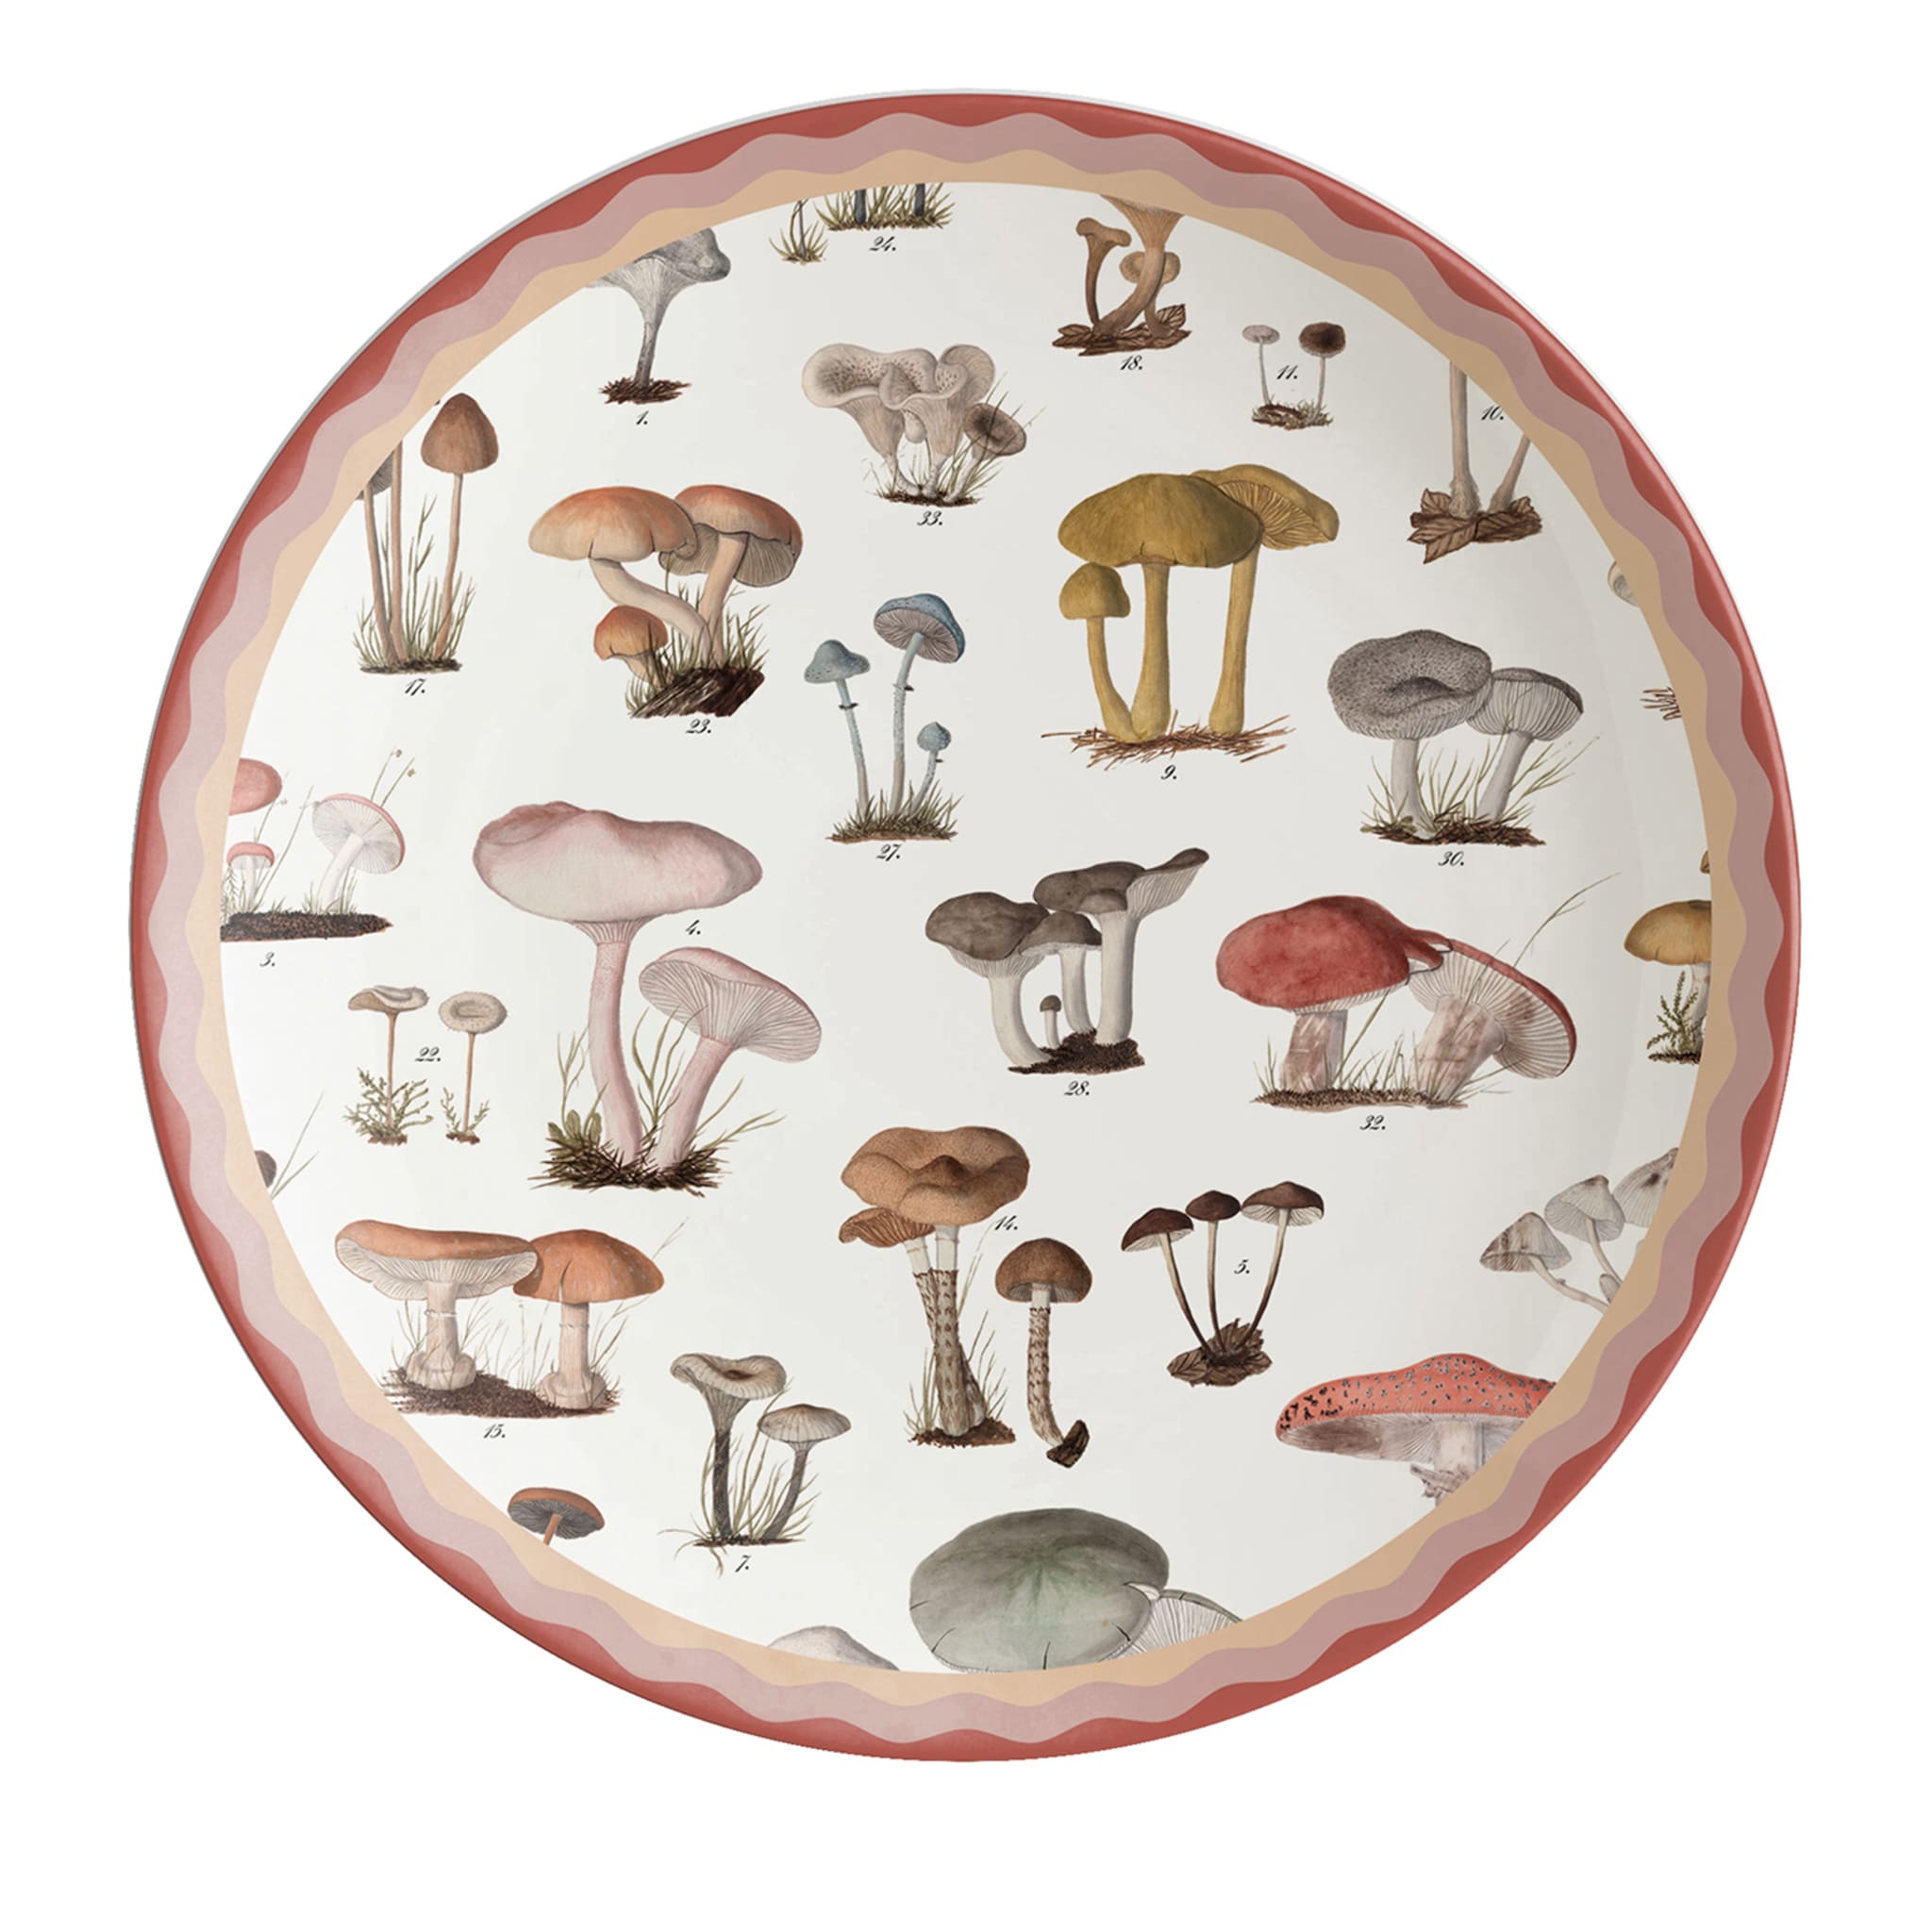 Cabinet De Curiosités Porcelain Dinner Plate With Mushrooms - Main view